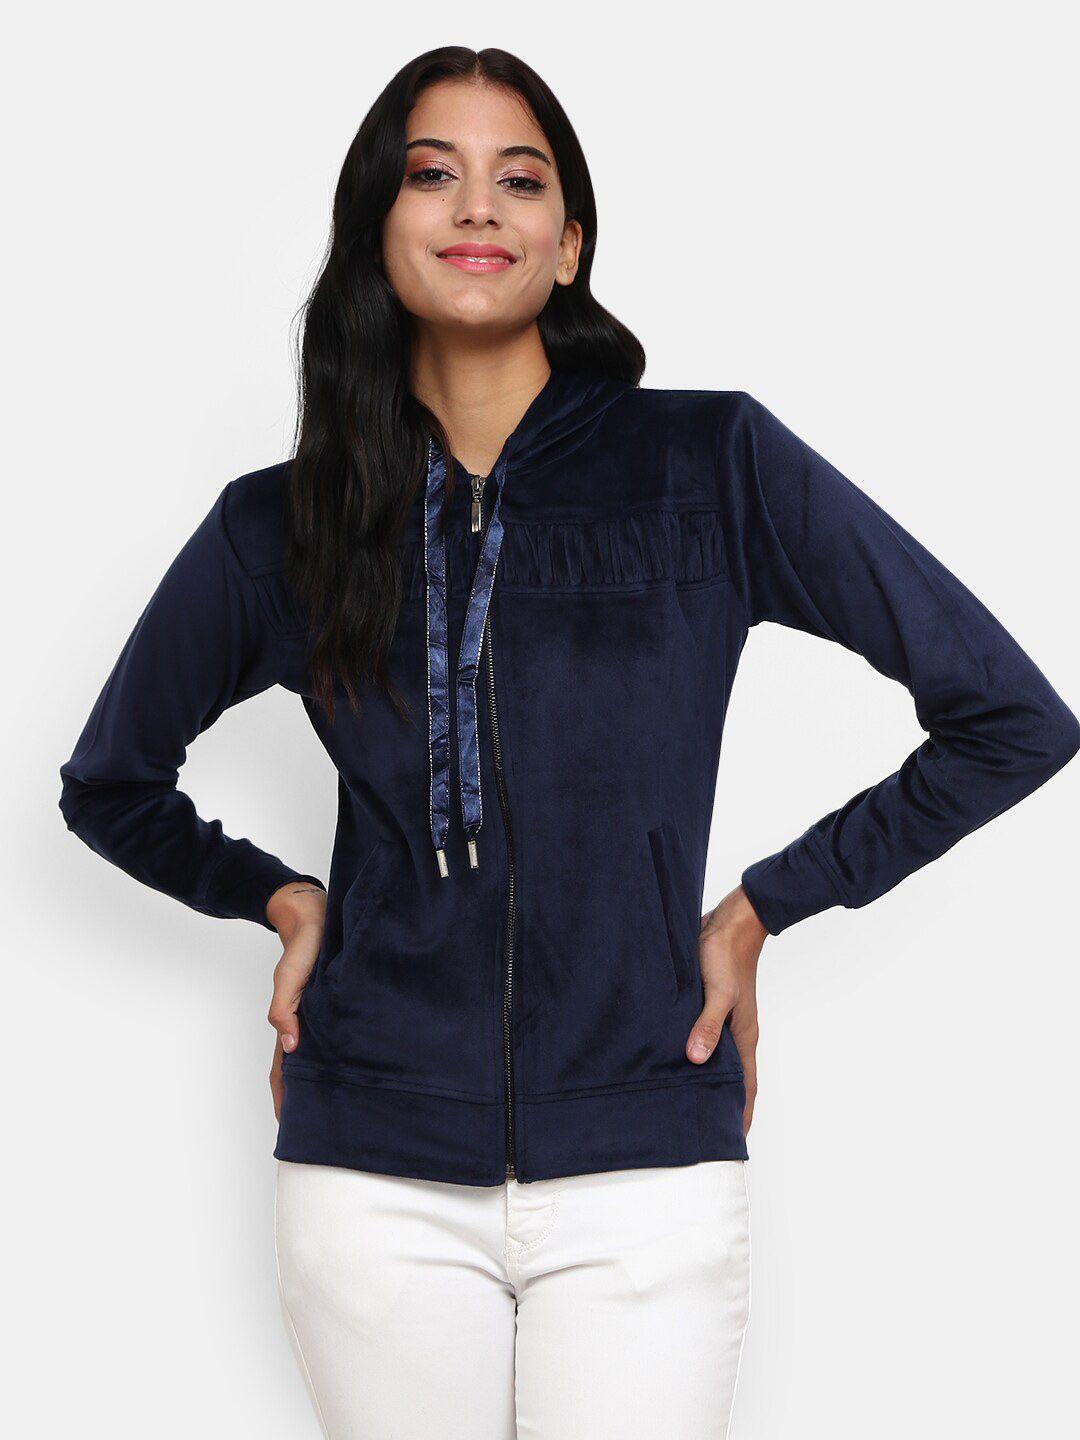 v-mart women navy blue hooded sweatshirt